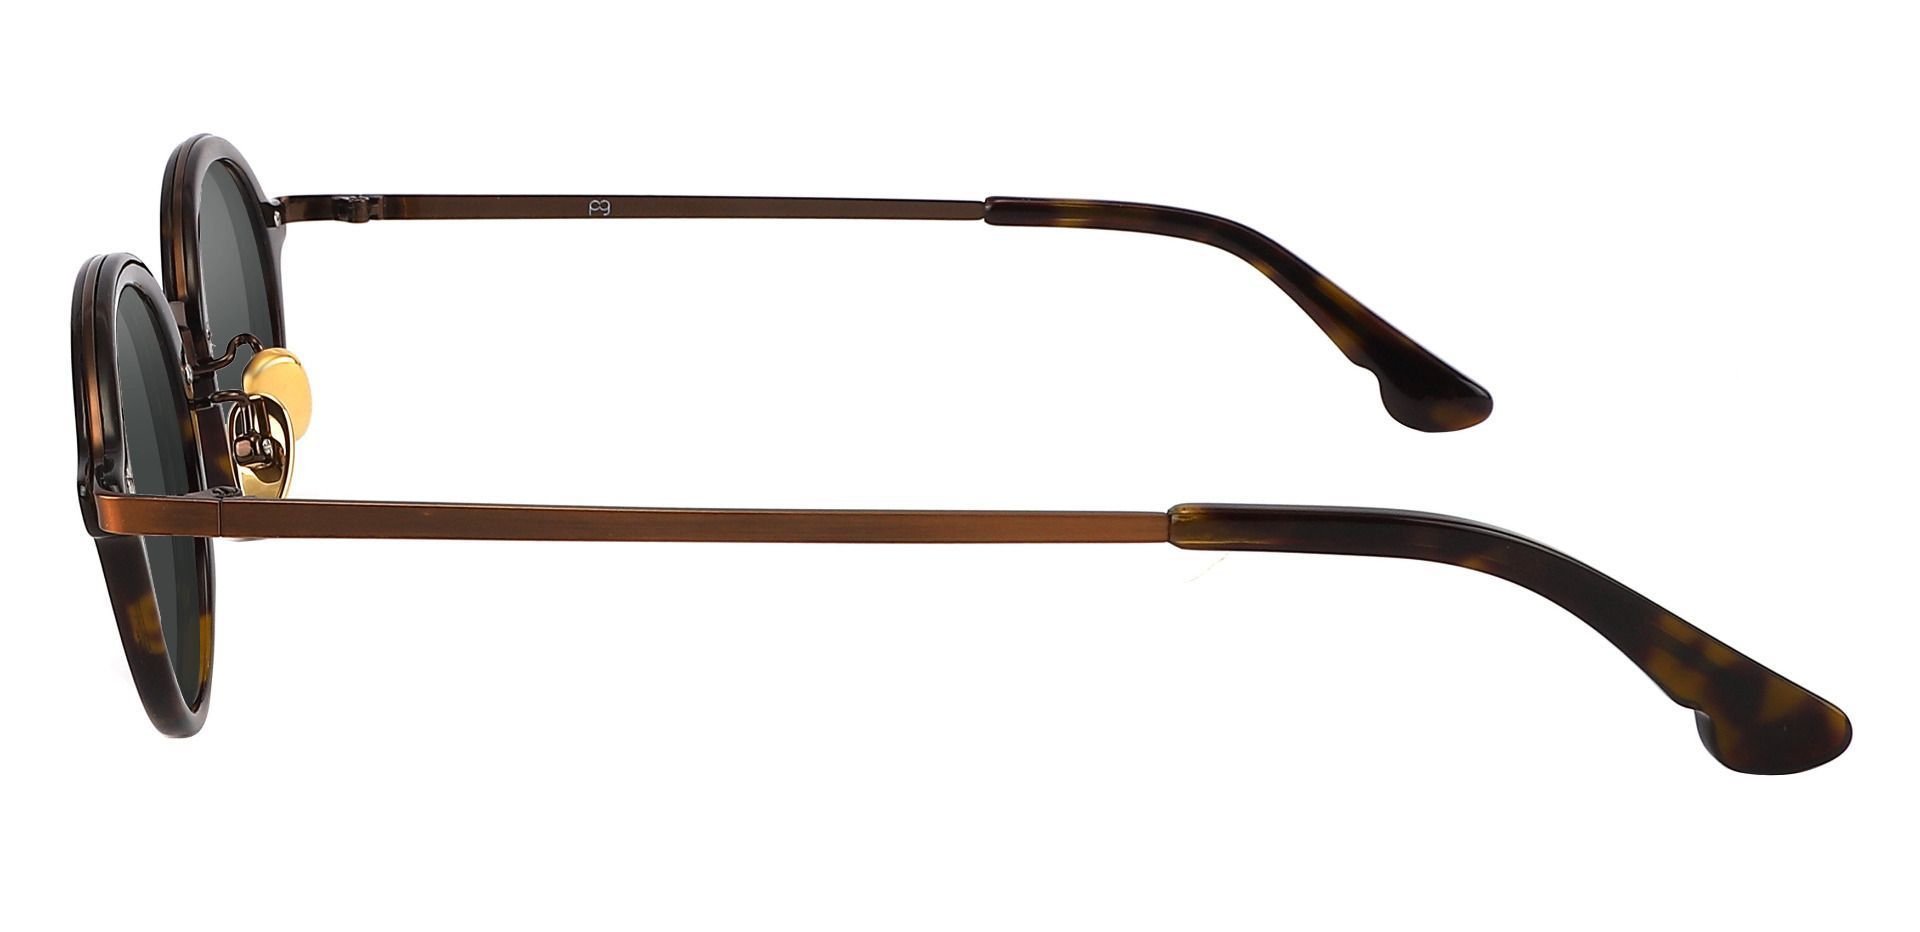 Humphrey Oval Prescription Sunglasses - Tortoise Frame With Gray Lenses